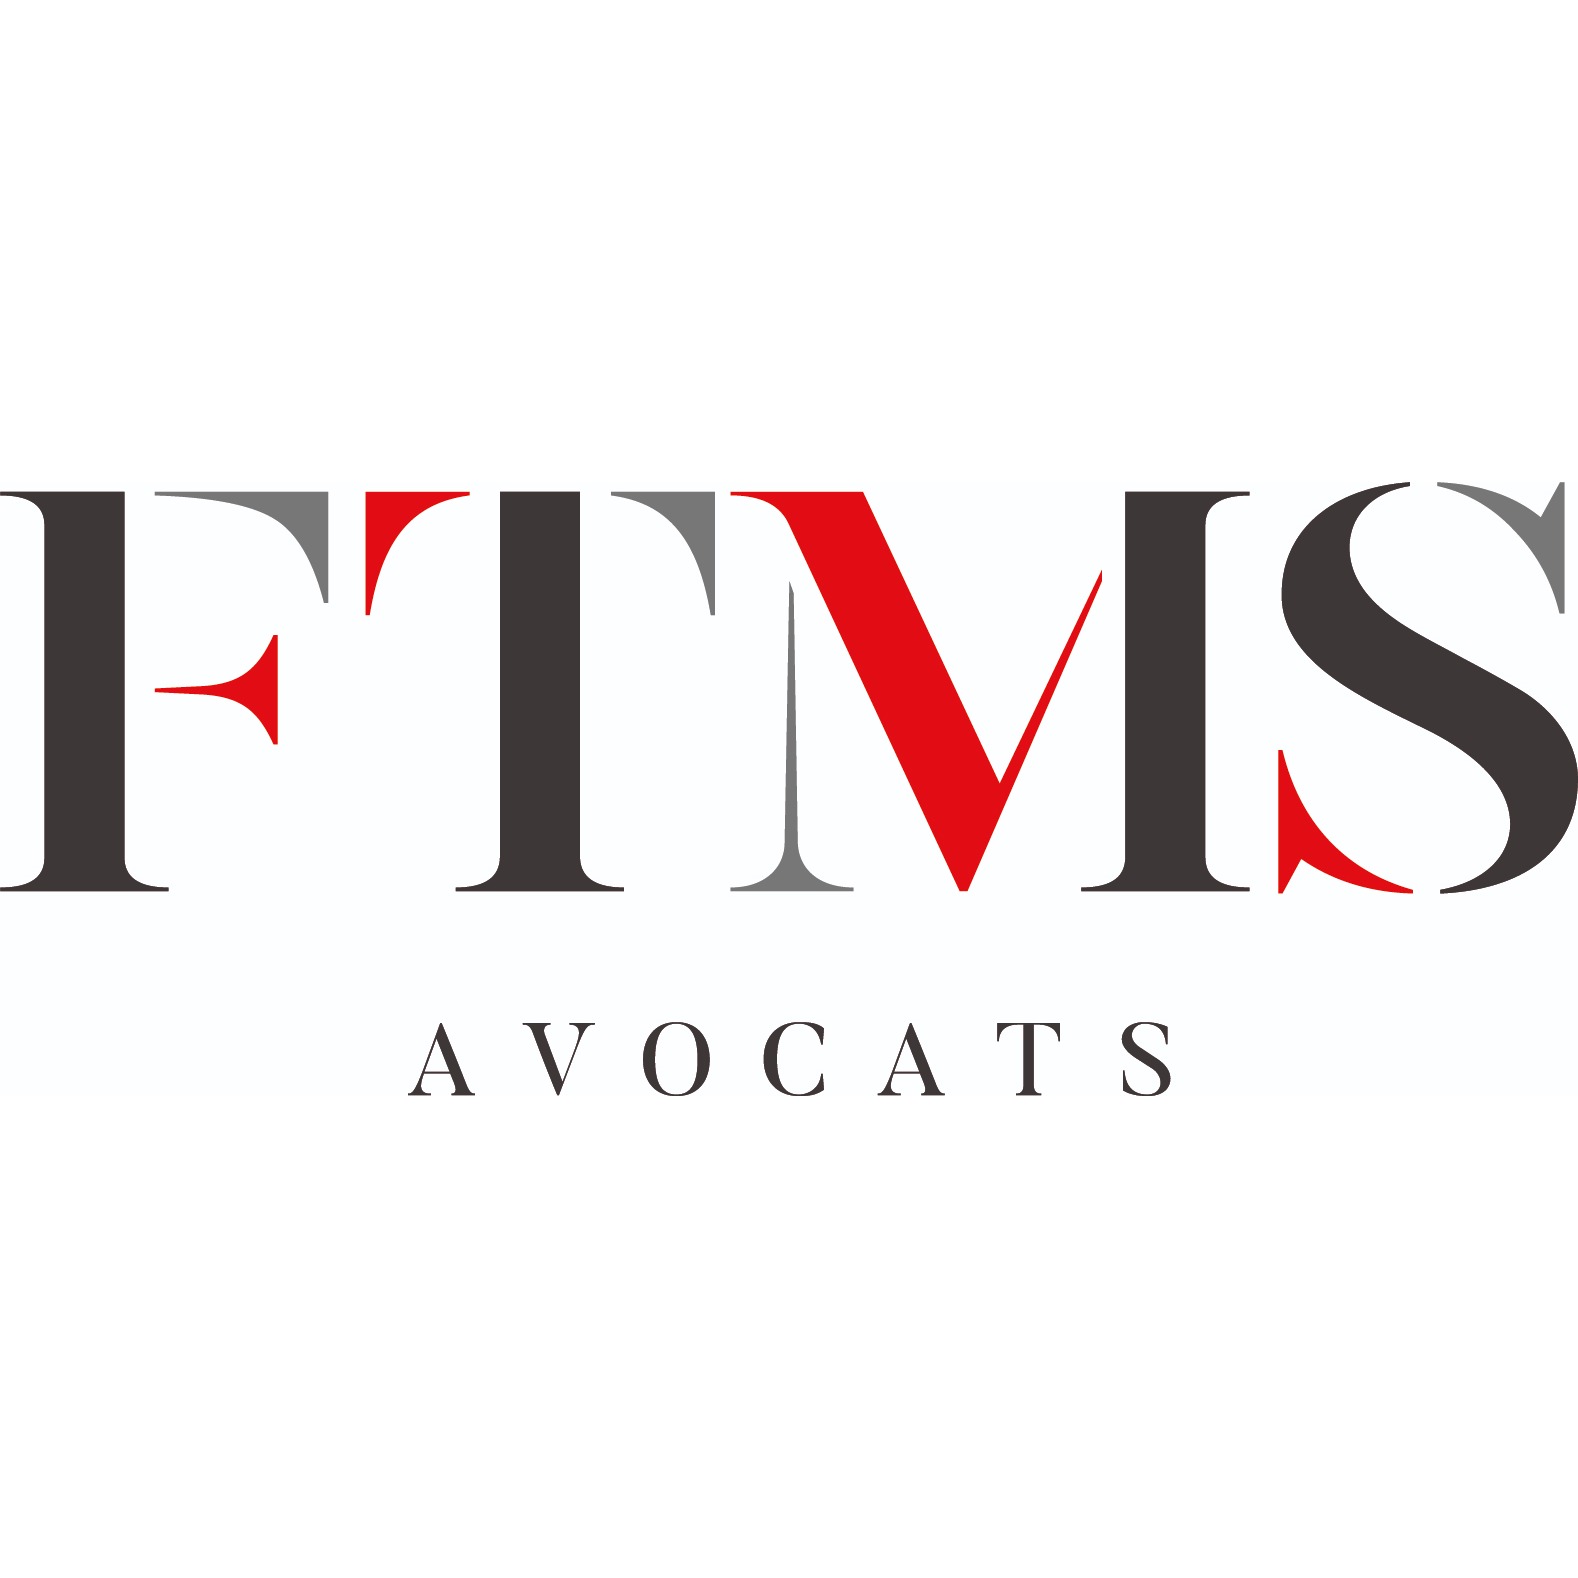 FTMS Avocats